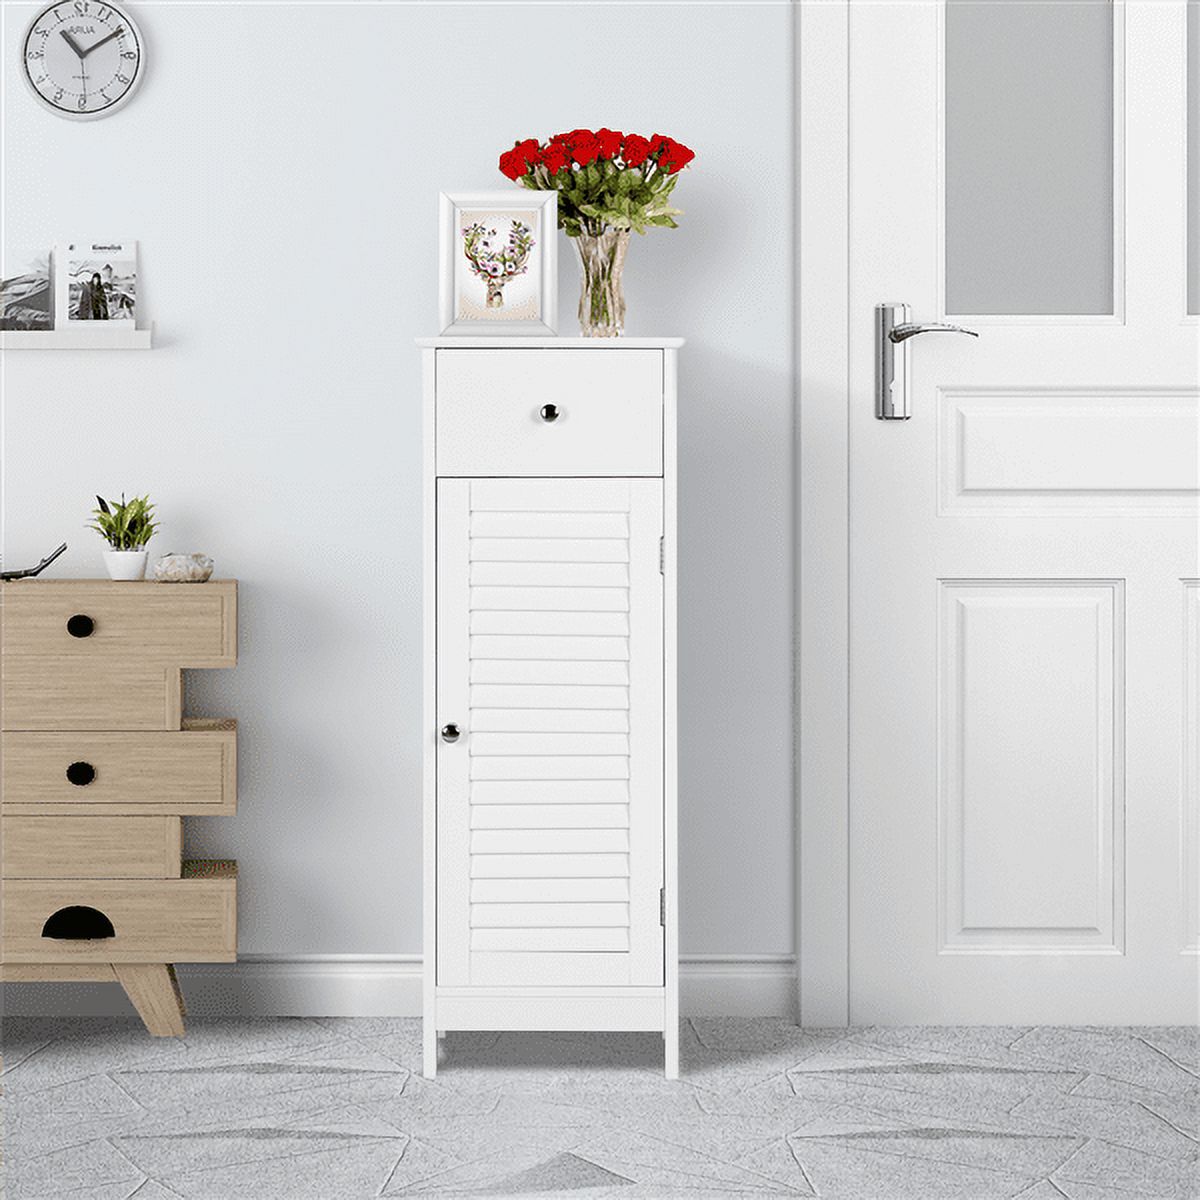 Topeakmart Bathroom Kitchen Floor Storage Cabinet with Drawer and Single Shutter Door White - image 2 of 15